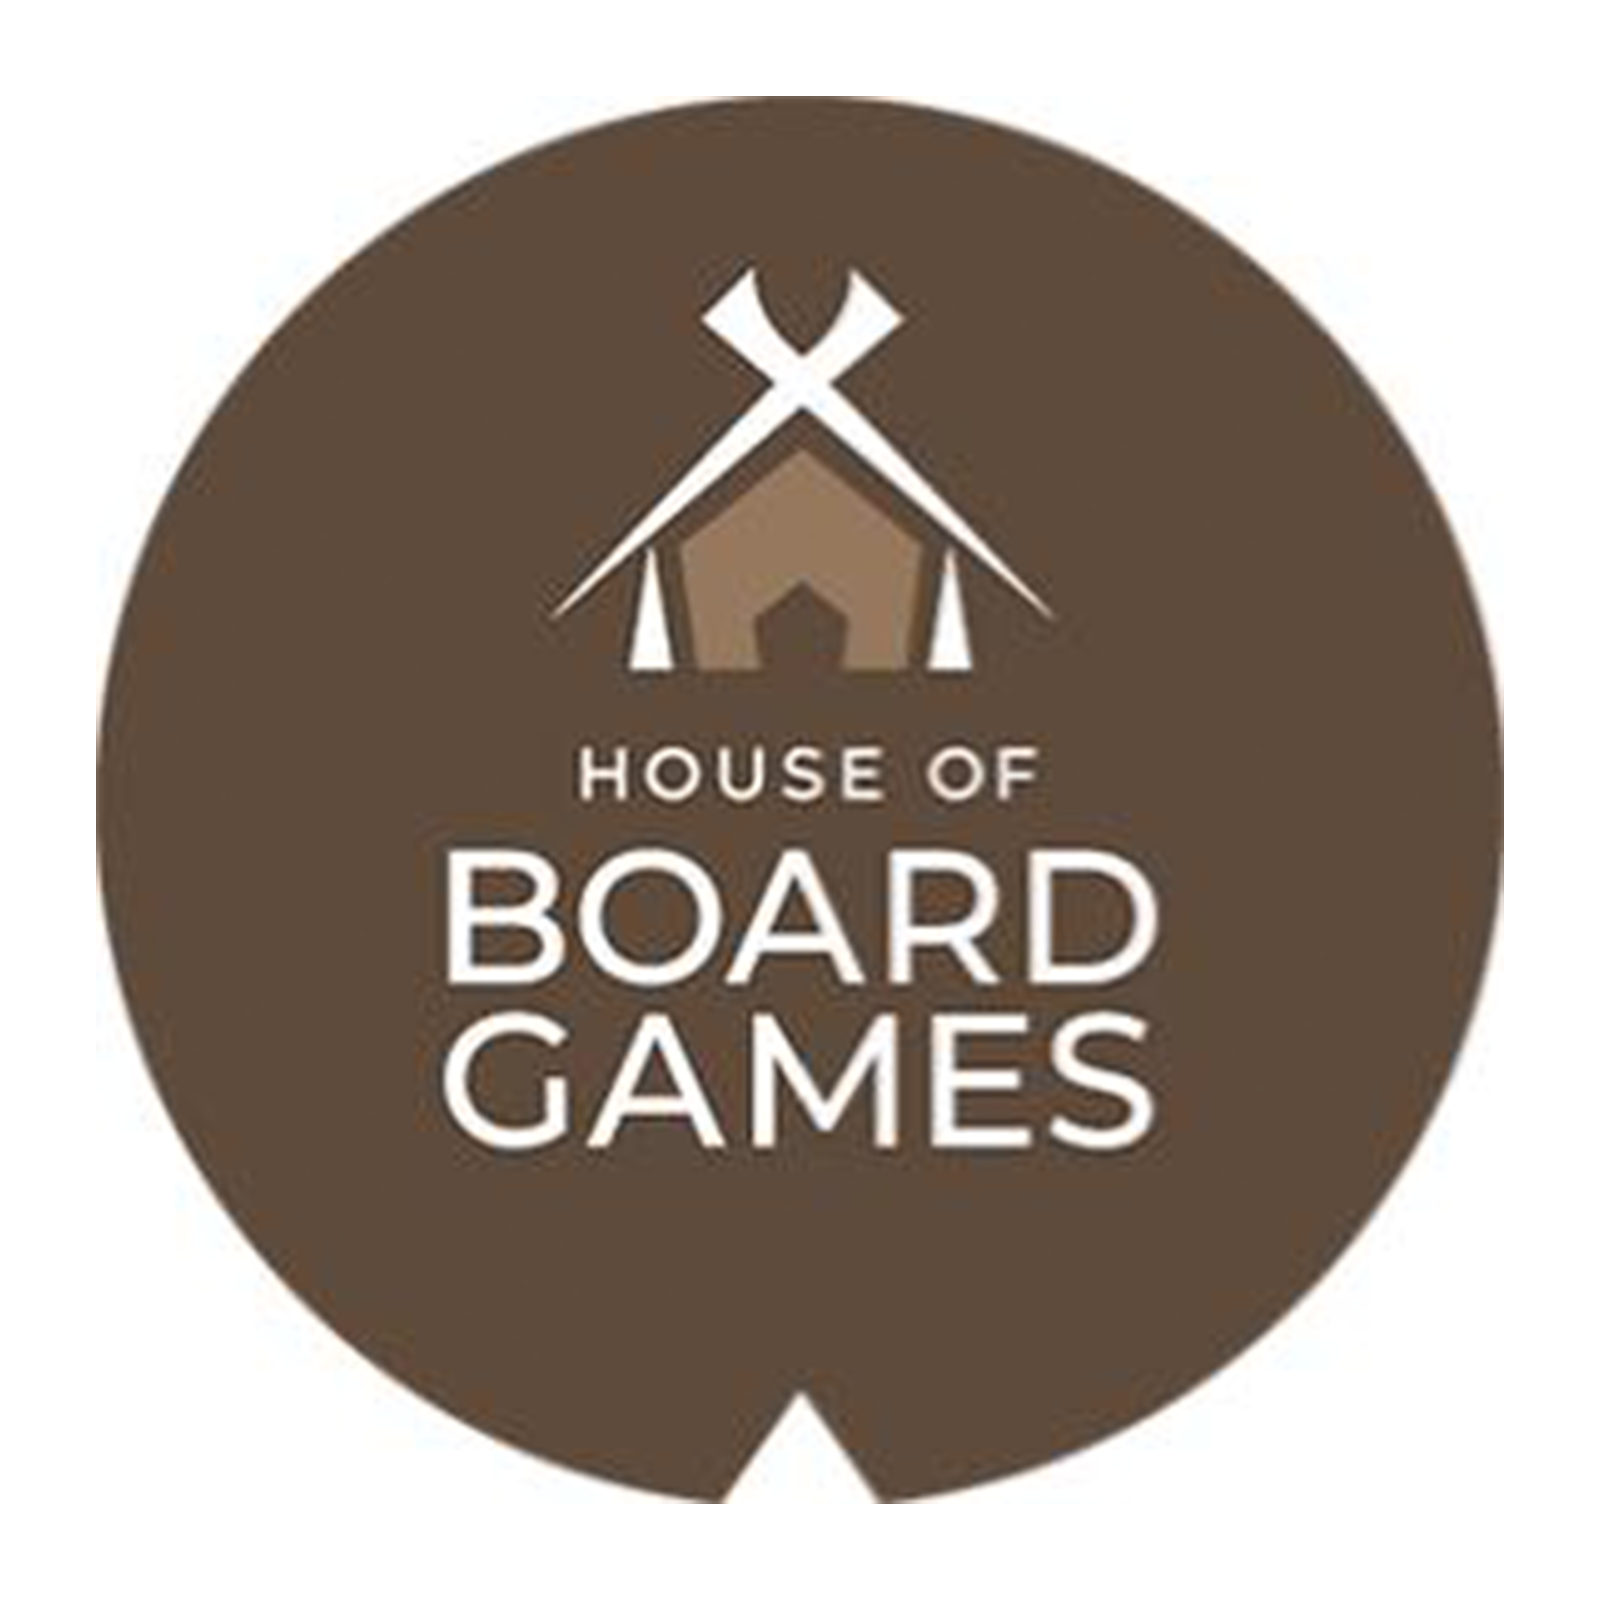 House of boardgames - modernhouse